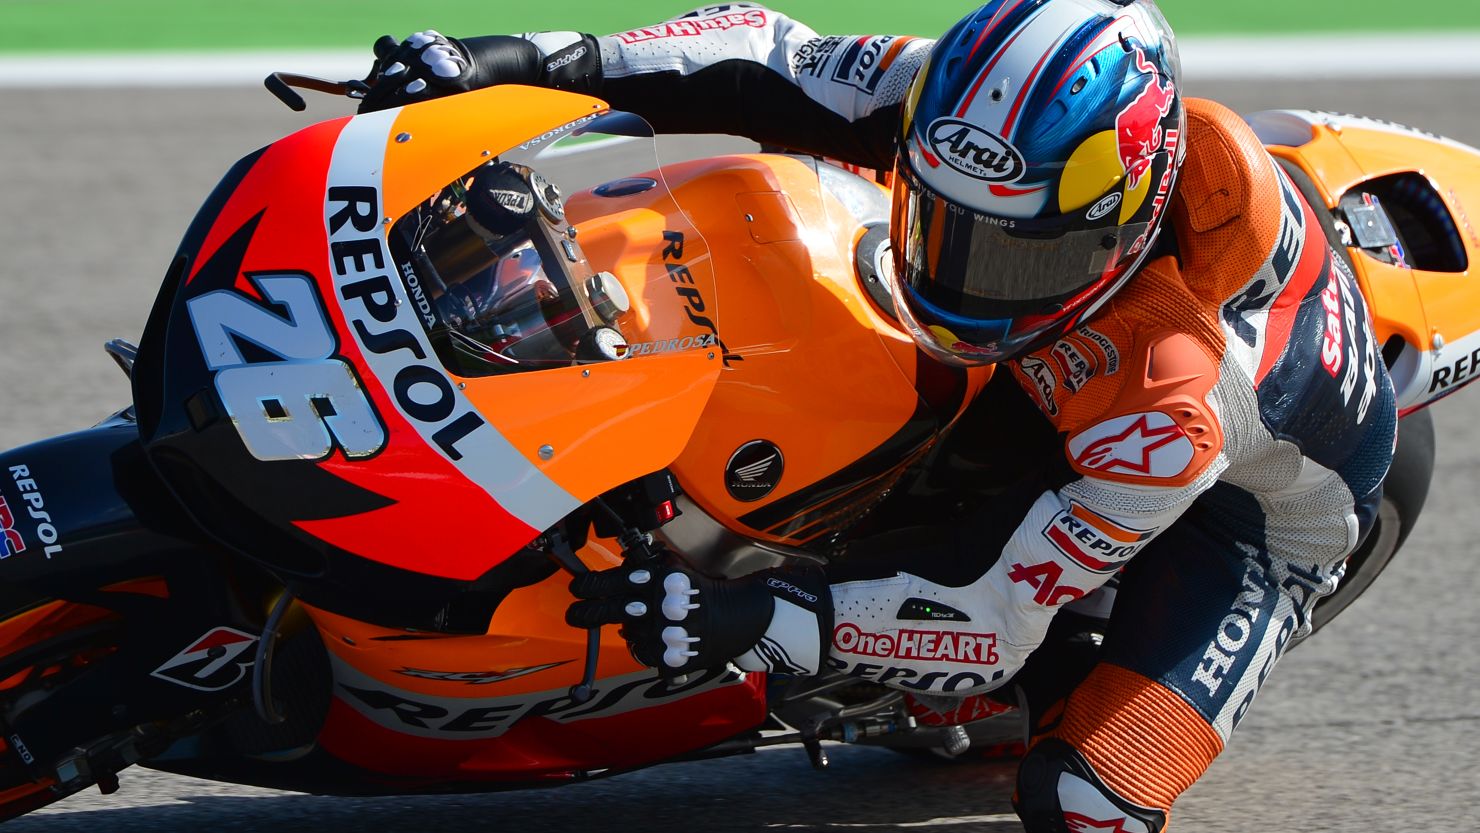 Spain's Dani Pedrosa was fastest in Saturday's qualifying session for the San Marino MotoGP